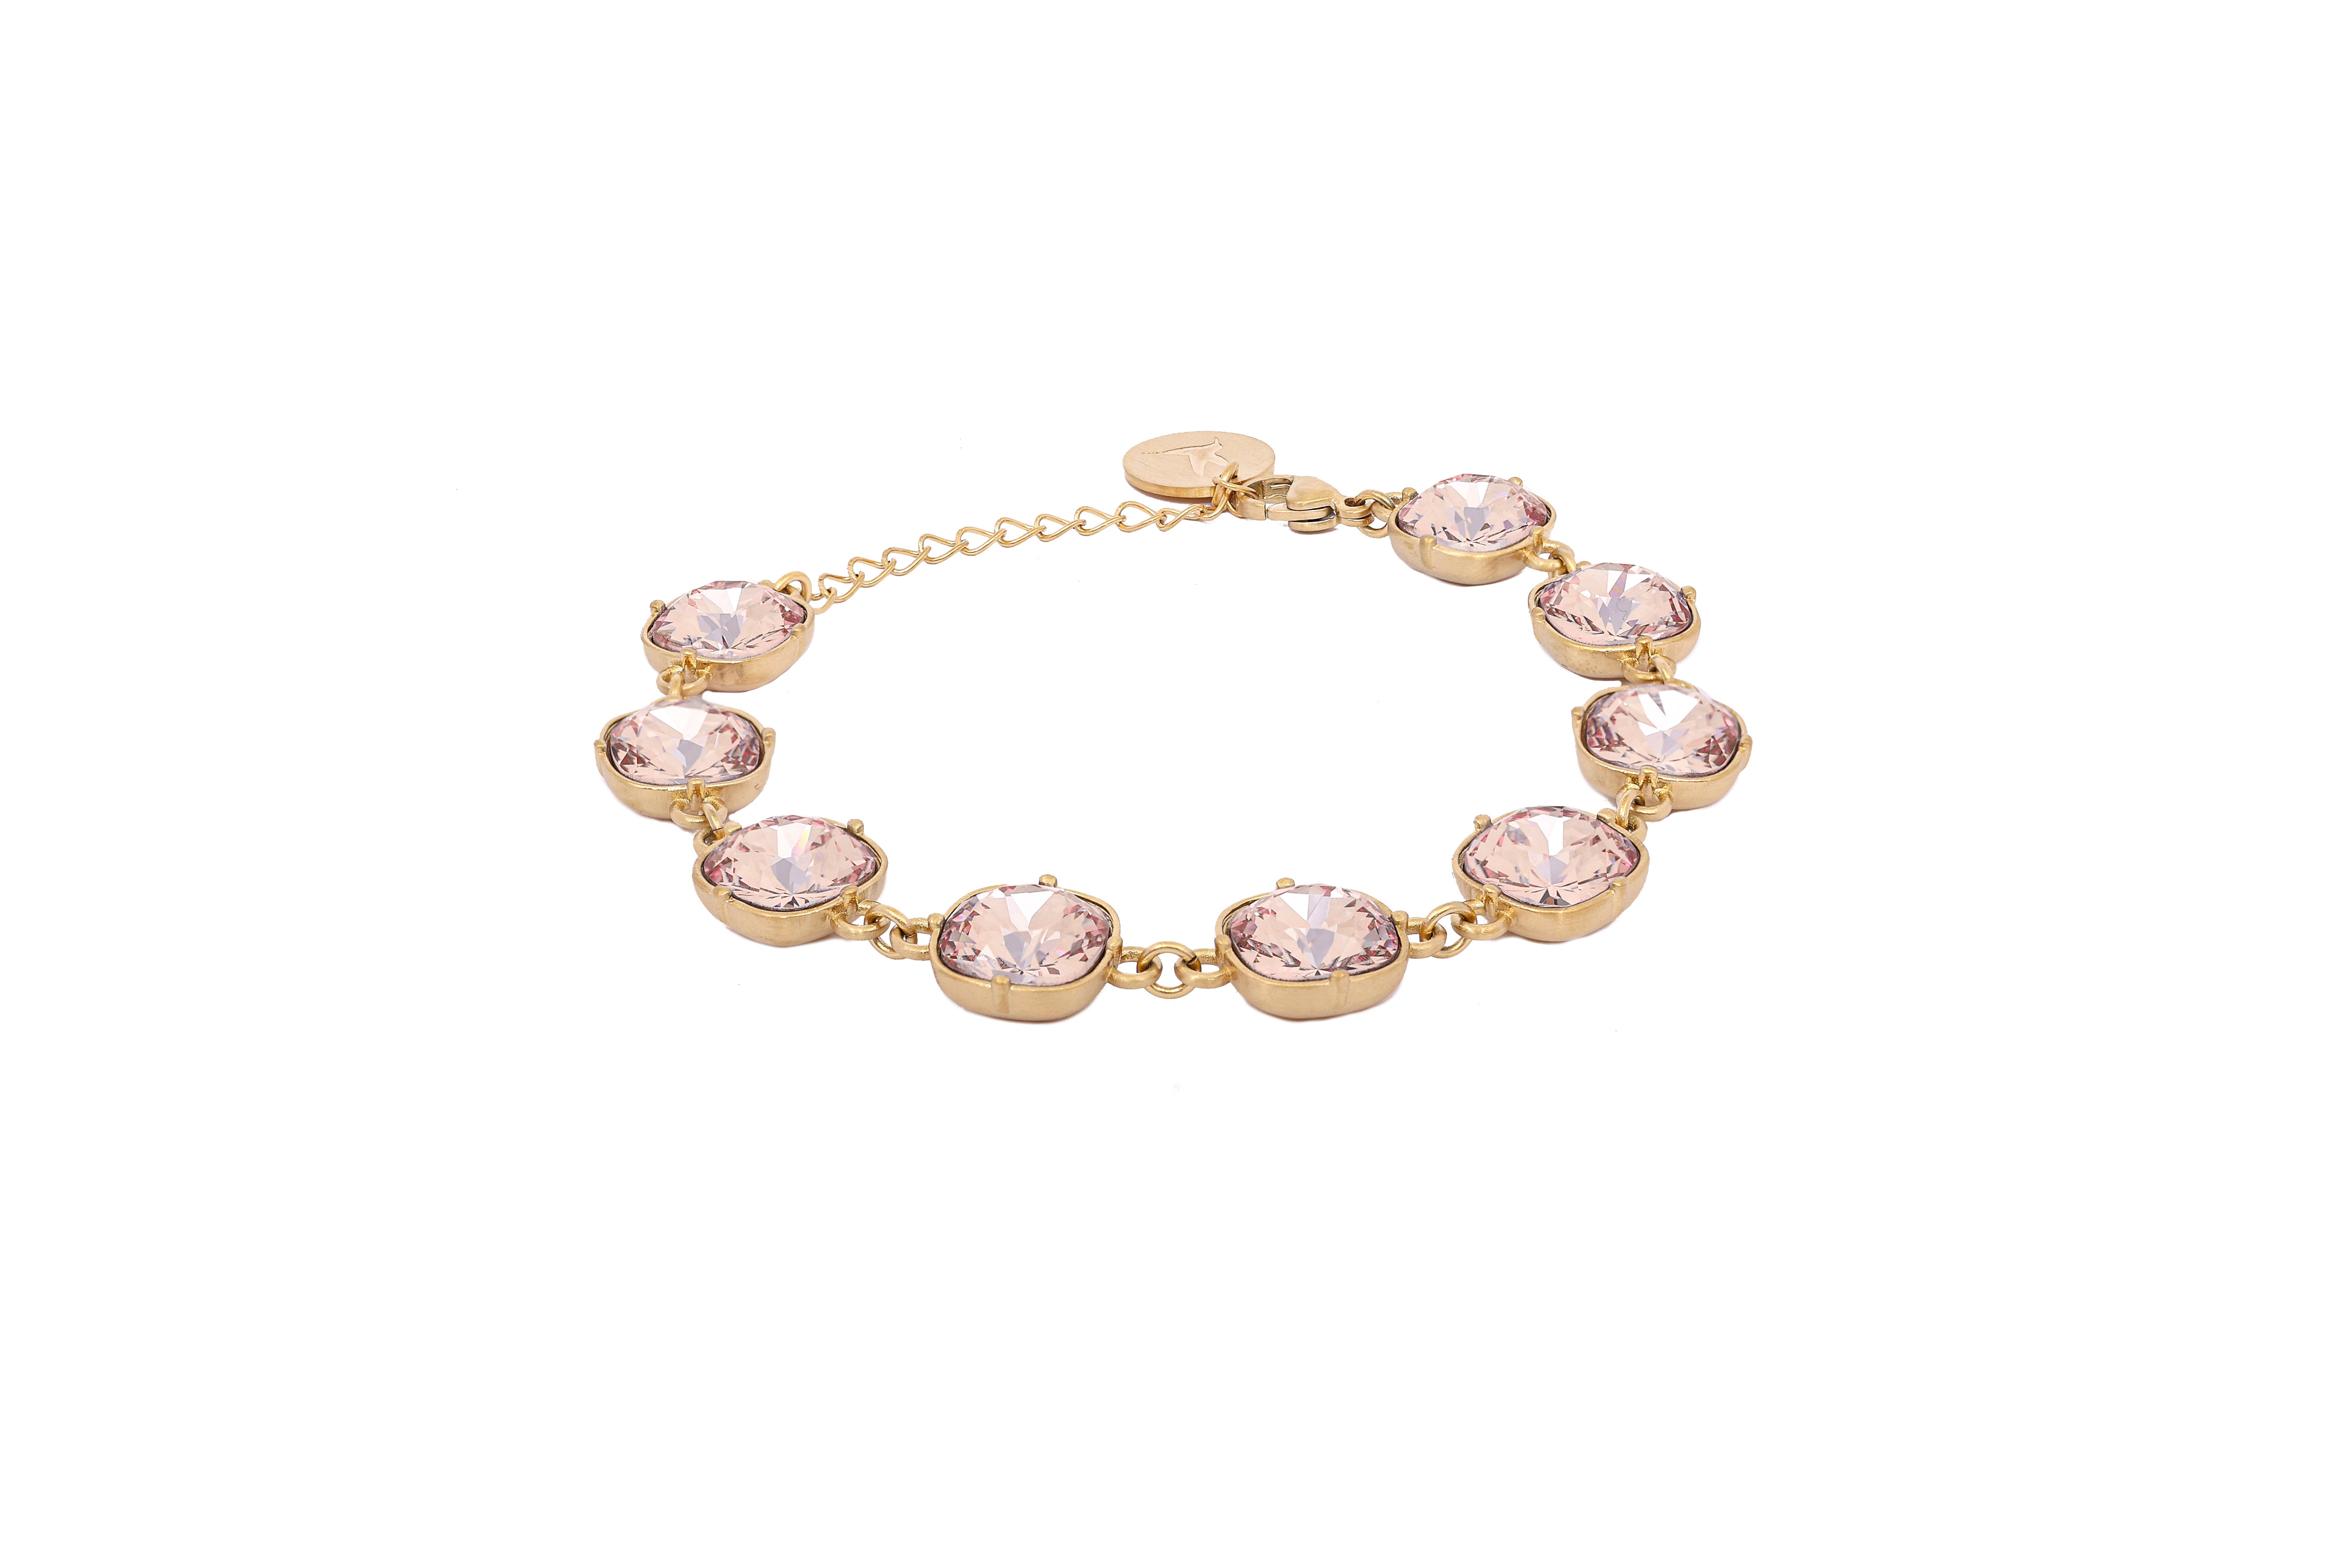 Carla Swarovski chain necklace - Light peach